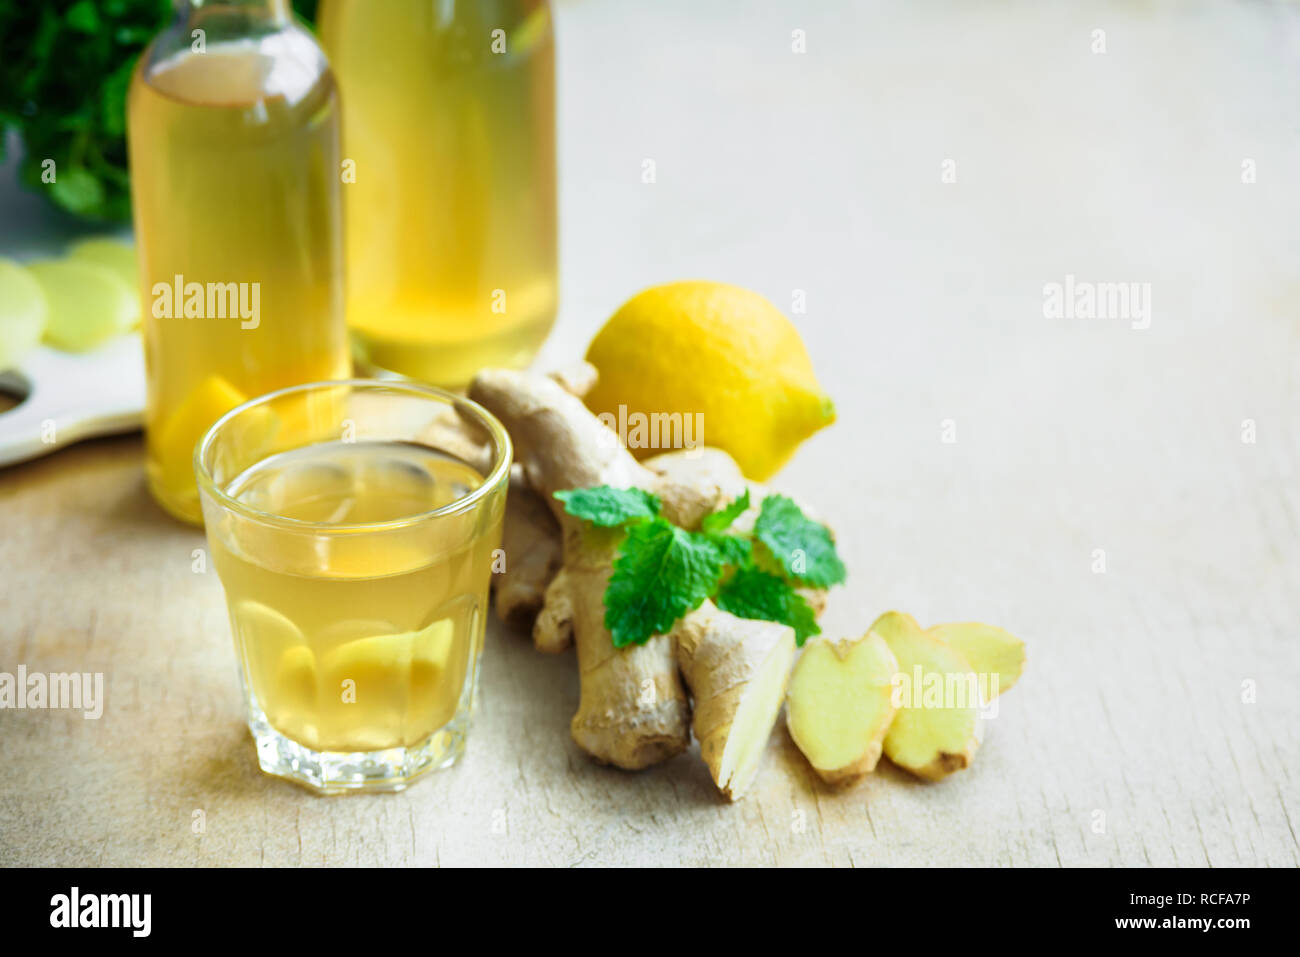 Bottle of detox ginger water on wooden background. Ingredients ginger, lemon, mint. Dieting concept. Stock Photo